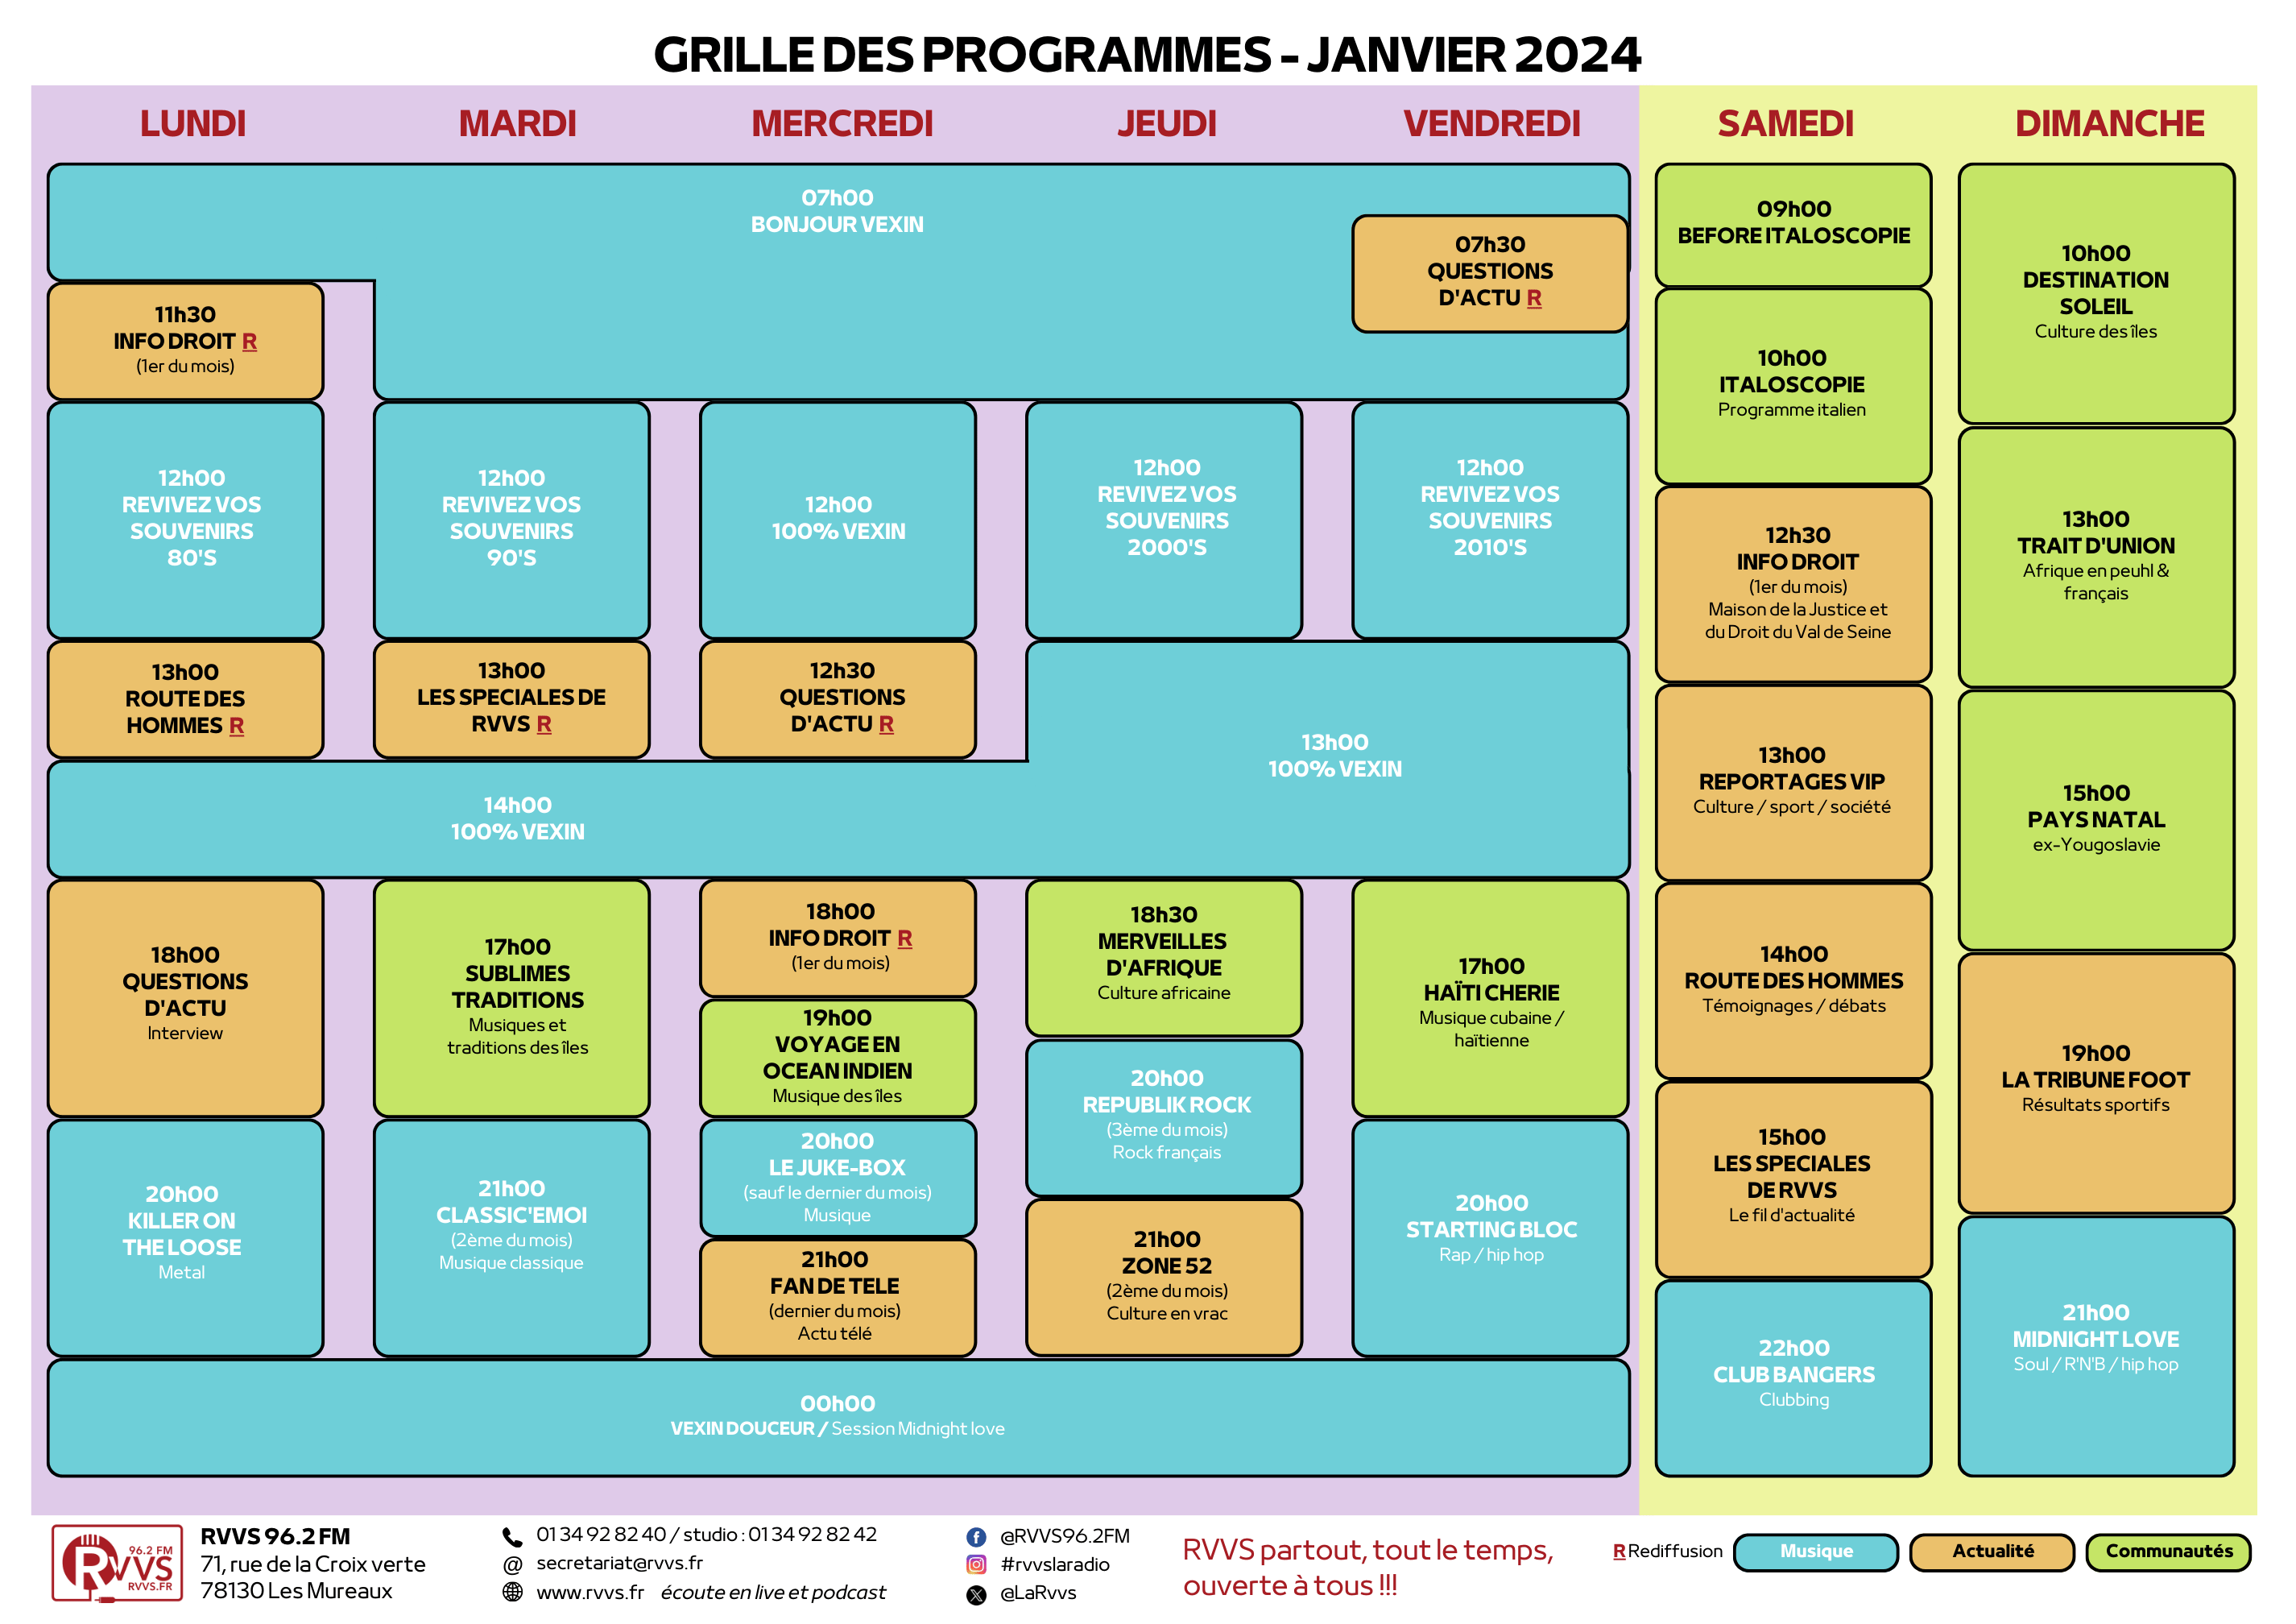 2023-2024 GRILLE DES PROGRAMMES